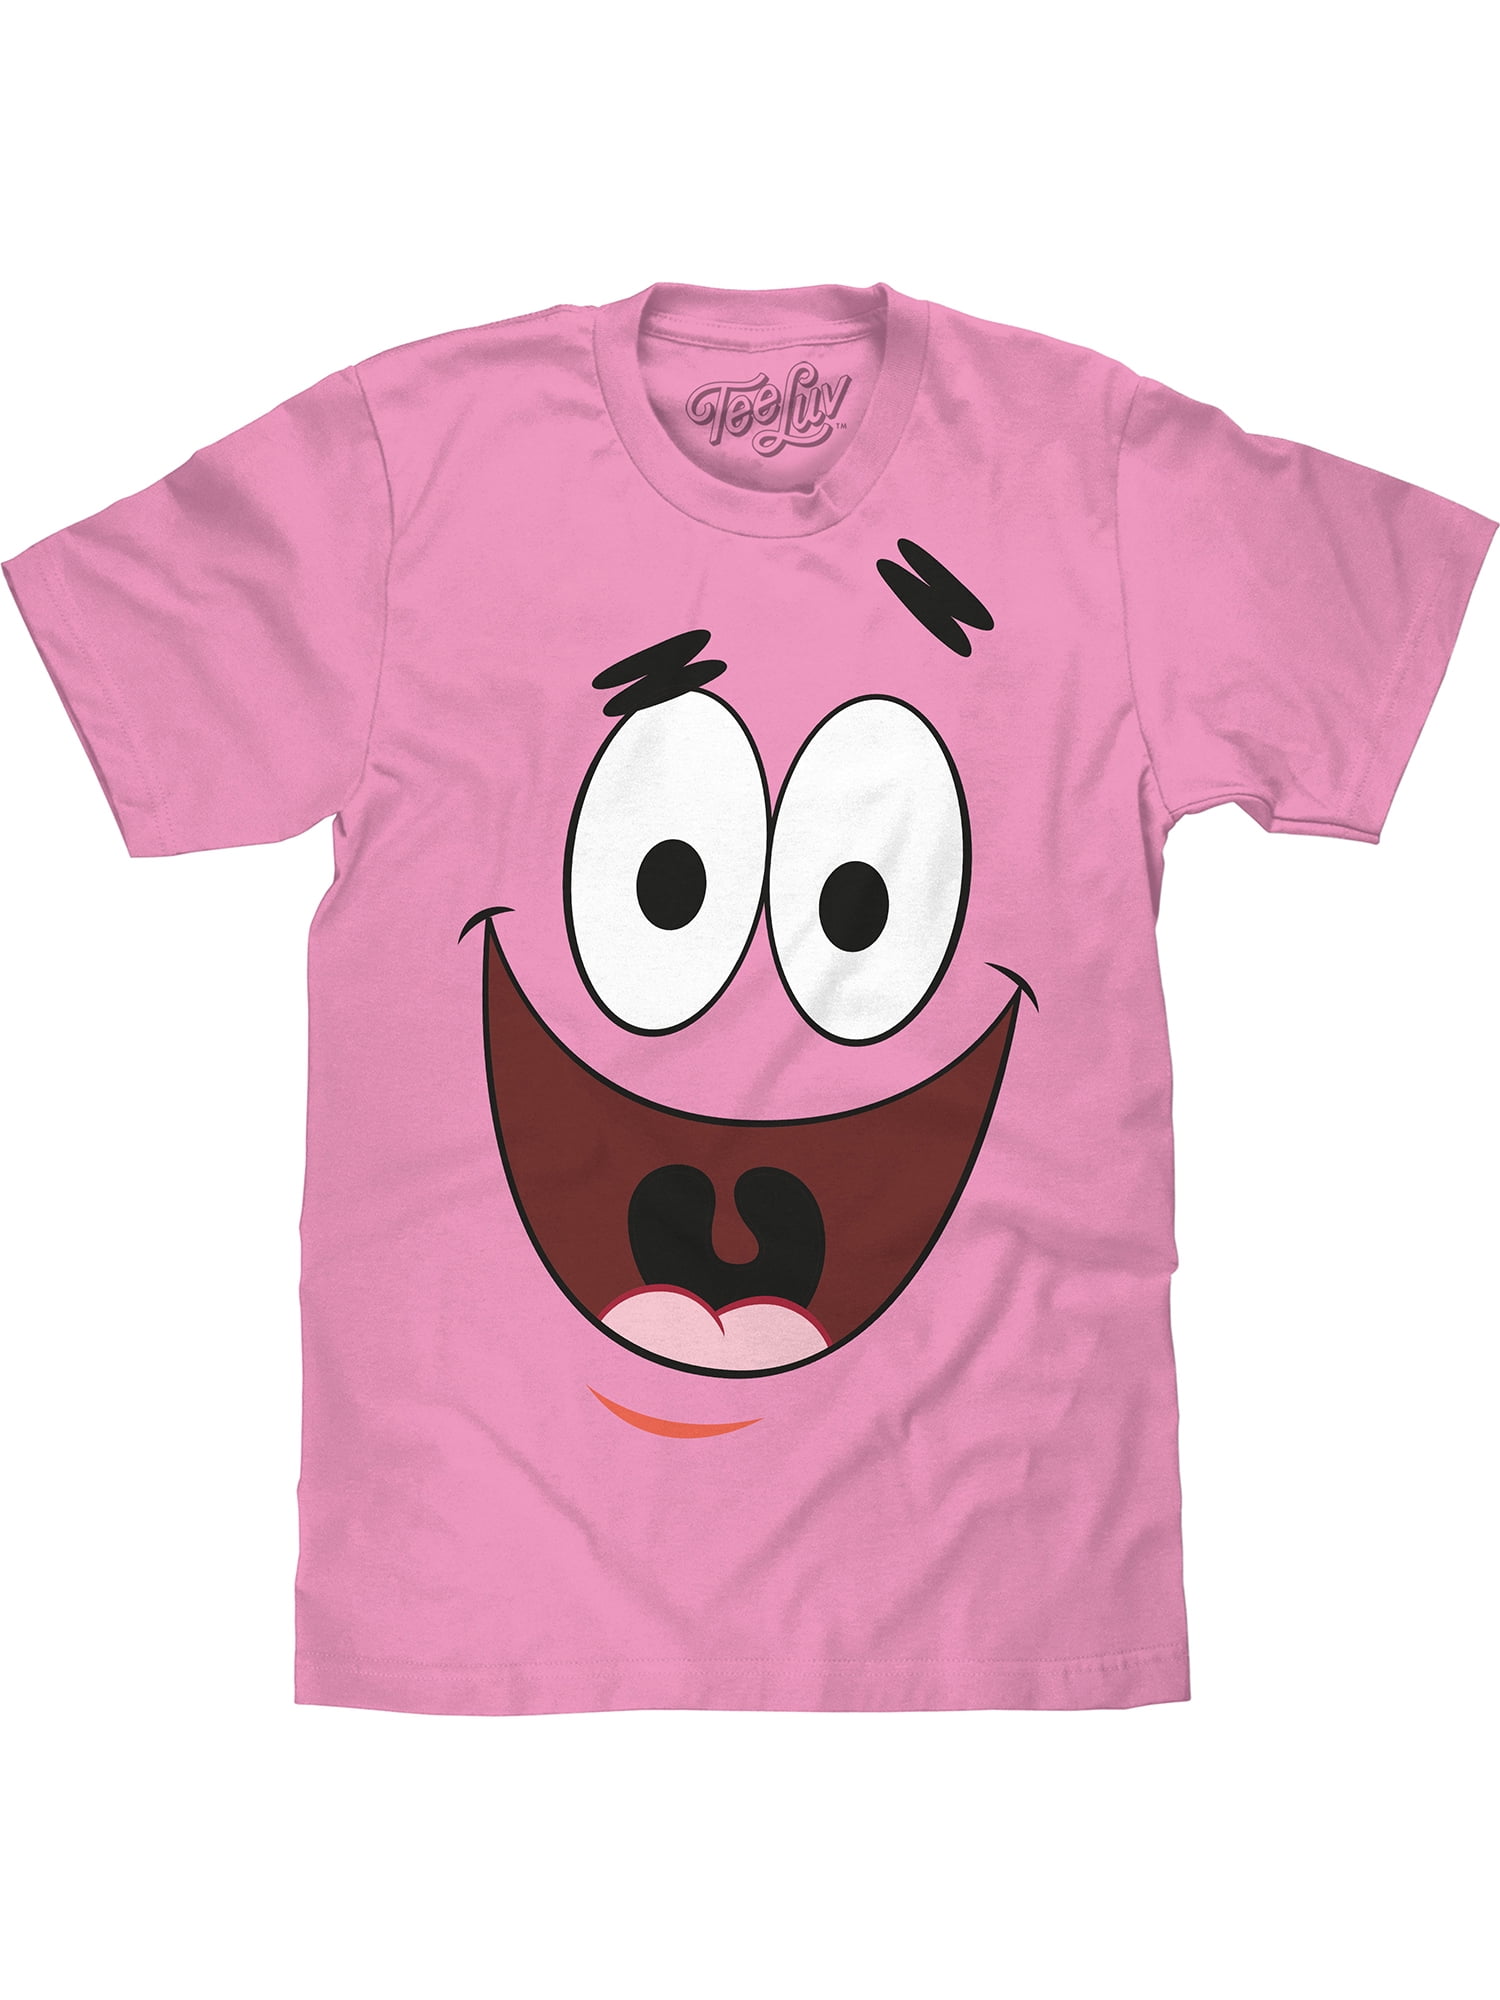 Tee Luv Men's Patrick Star Cartoon Character Face Shirt (L